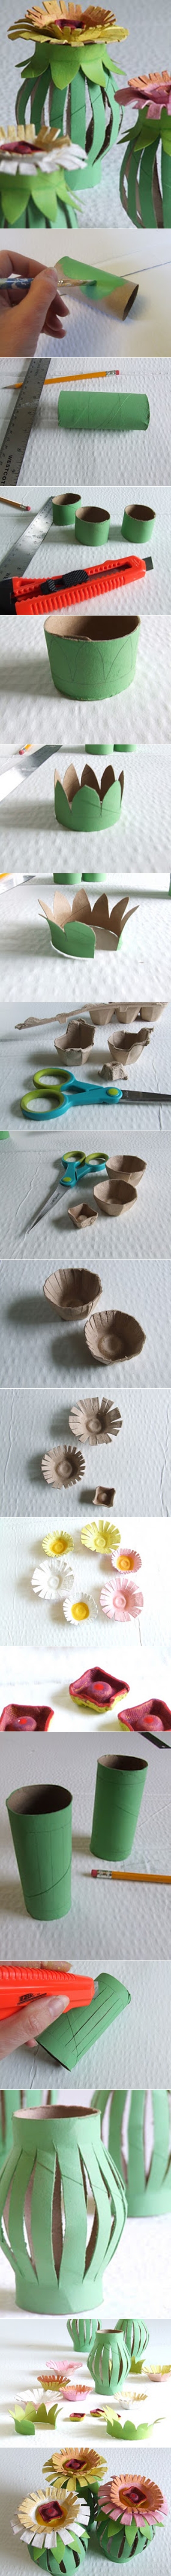 DIY Toilet Paper Roll Egg Carton Flower Lantern